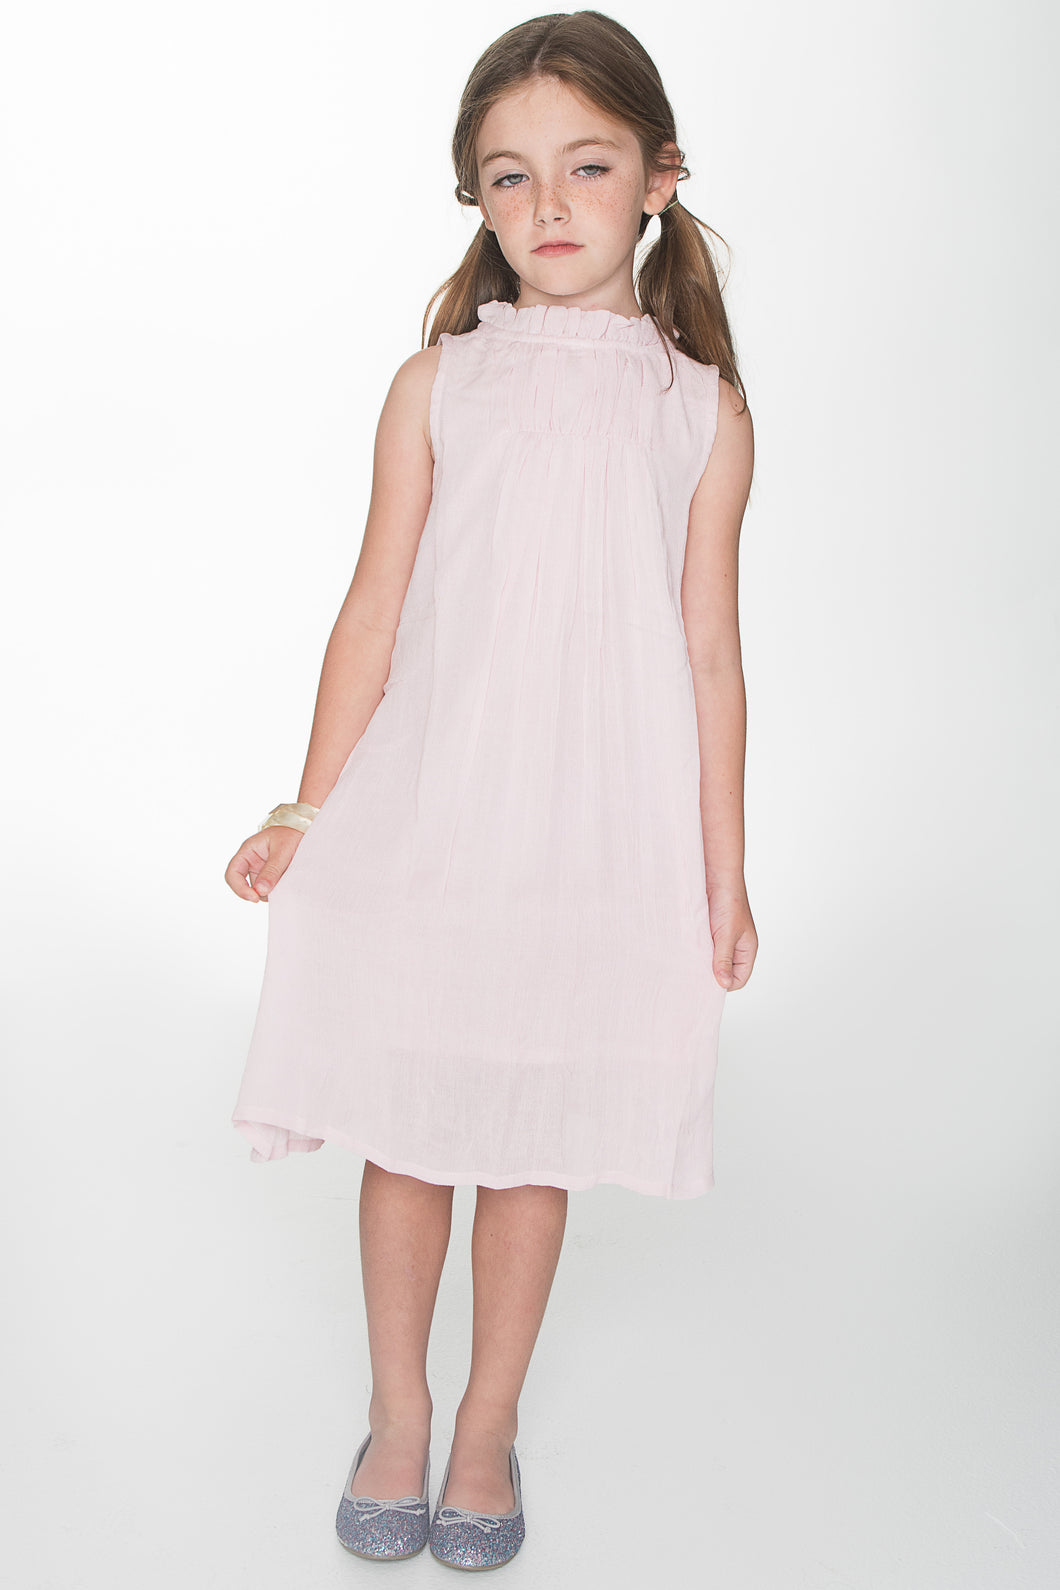 Light Pink Ruched Detail Shift Dress - Kids Wholesale Boutique Clothing, Dress - Girls Dresses, Yo Baby Wholesale - Yo Baby